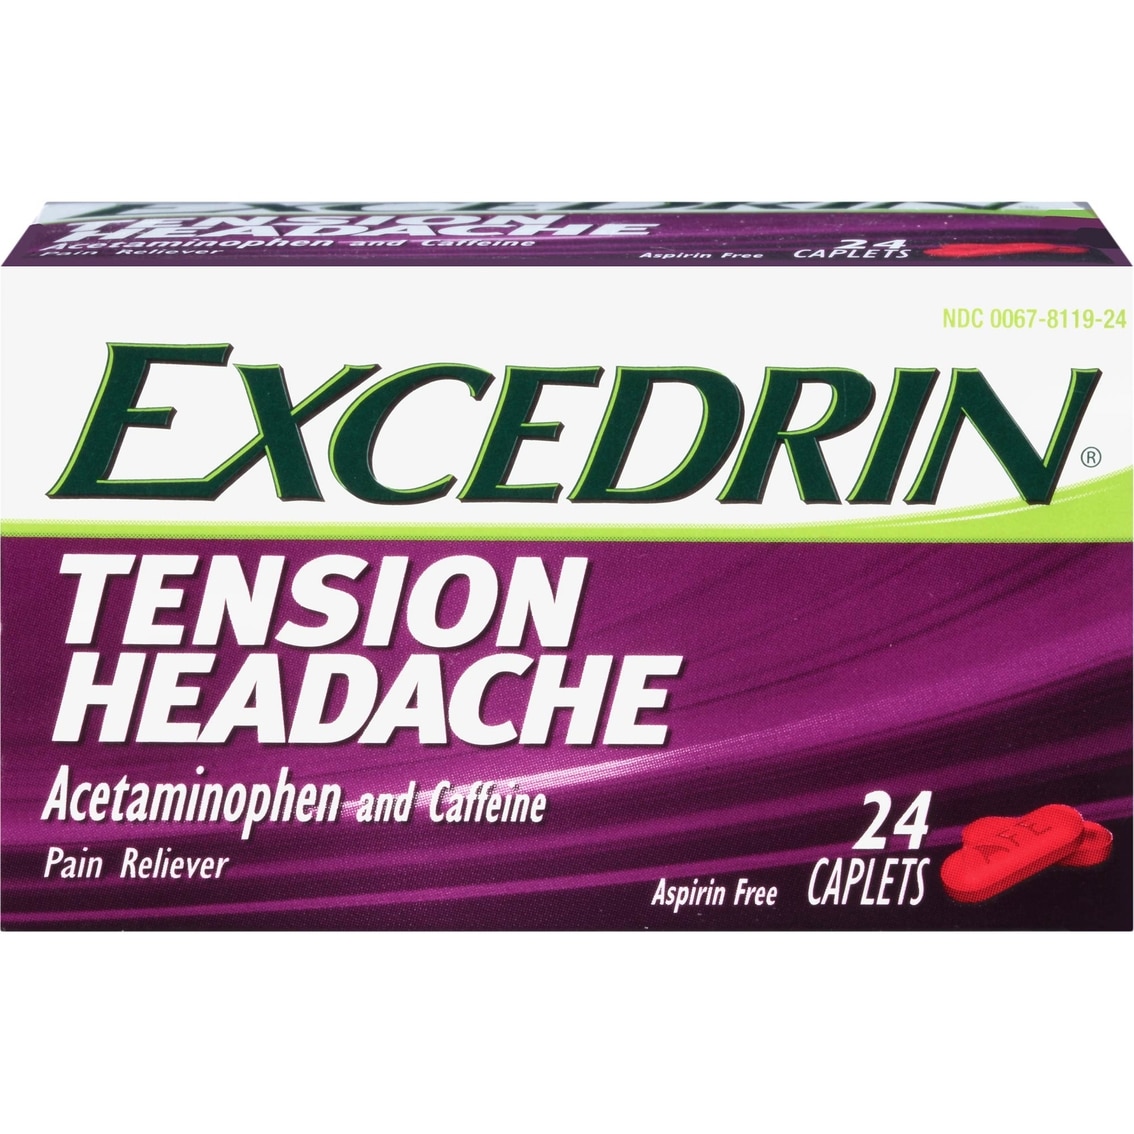 Can You Take Excedrin Tension Headache While Pregnant